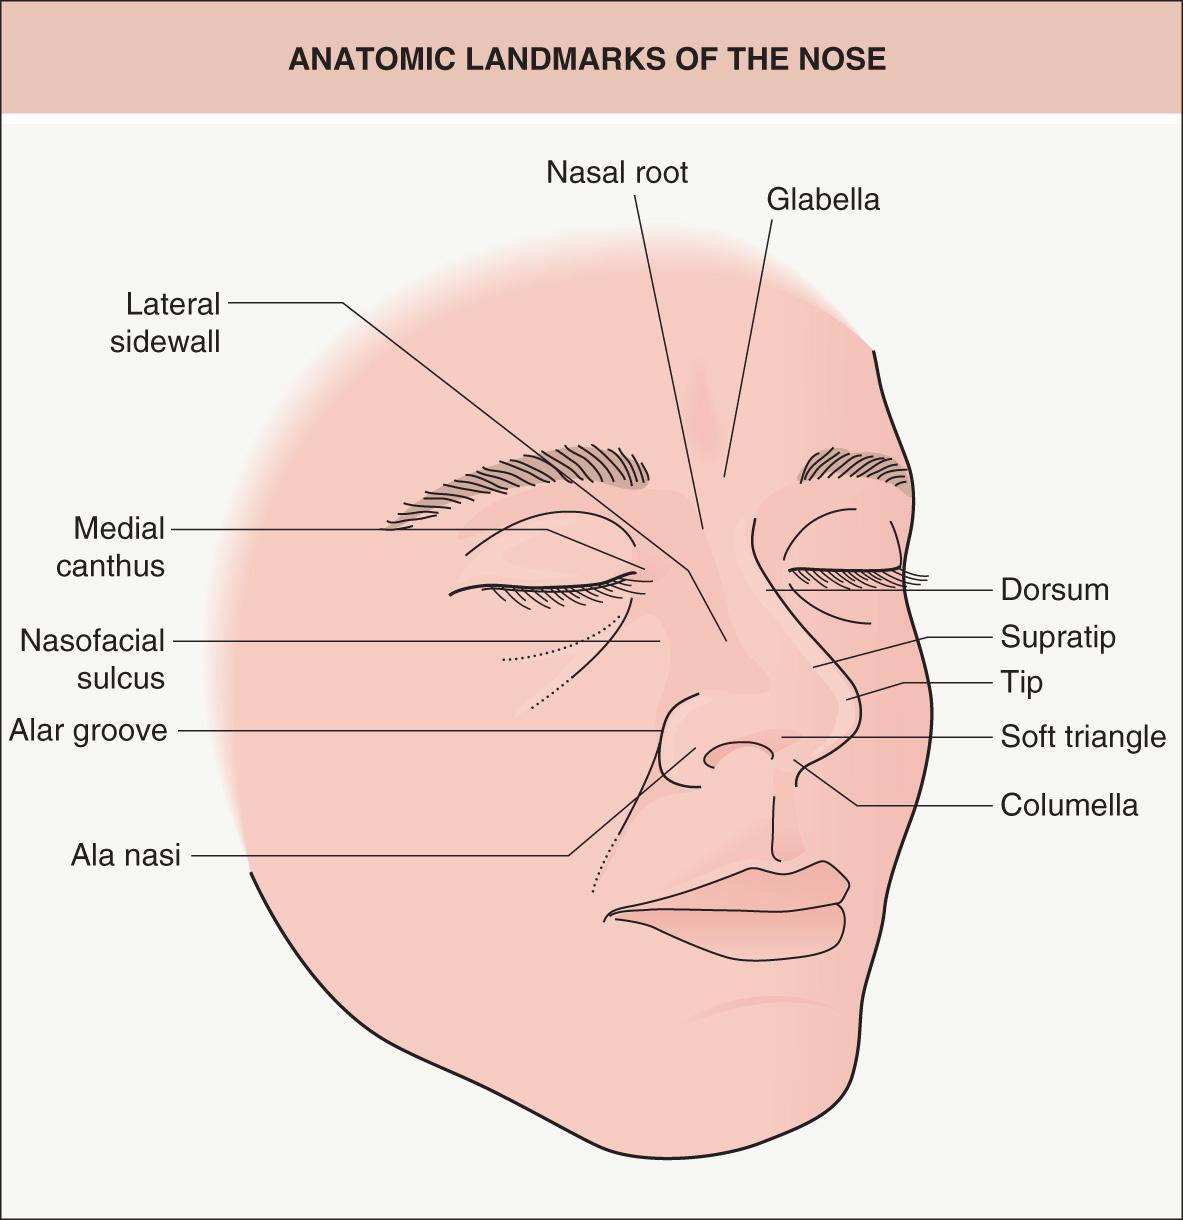 Fig. 142.10, Anatomic landmarks of the nose.